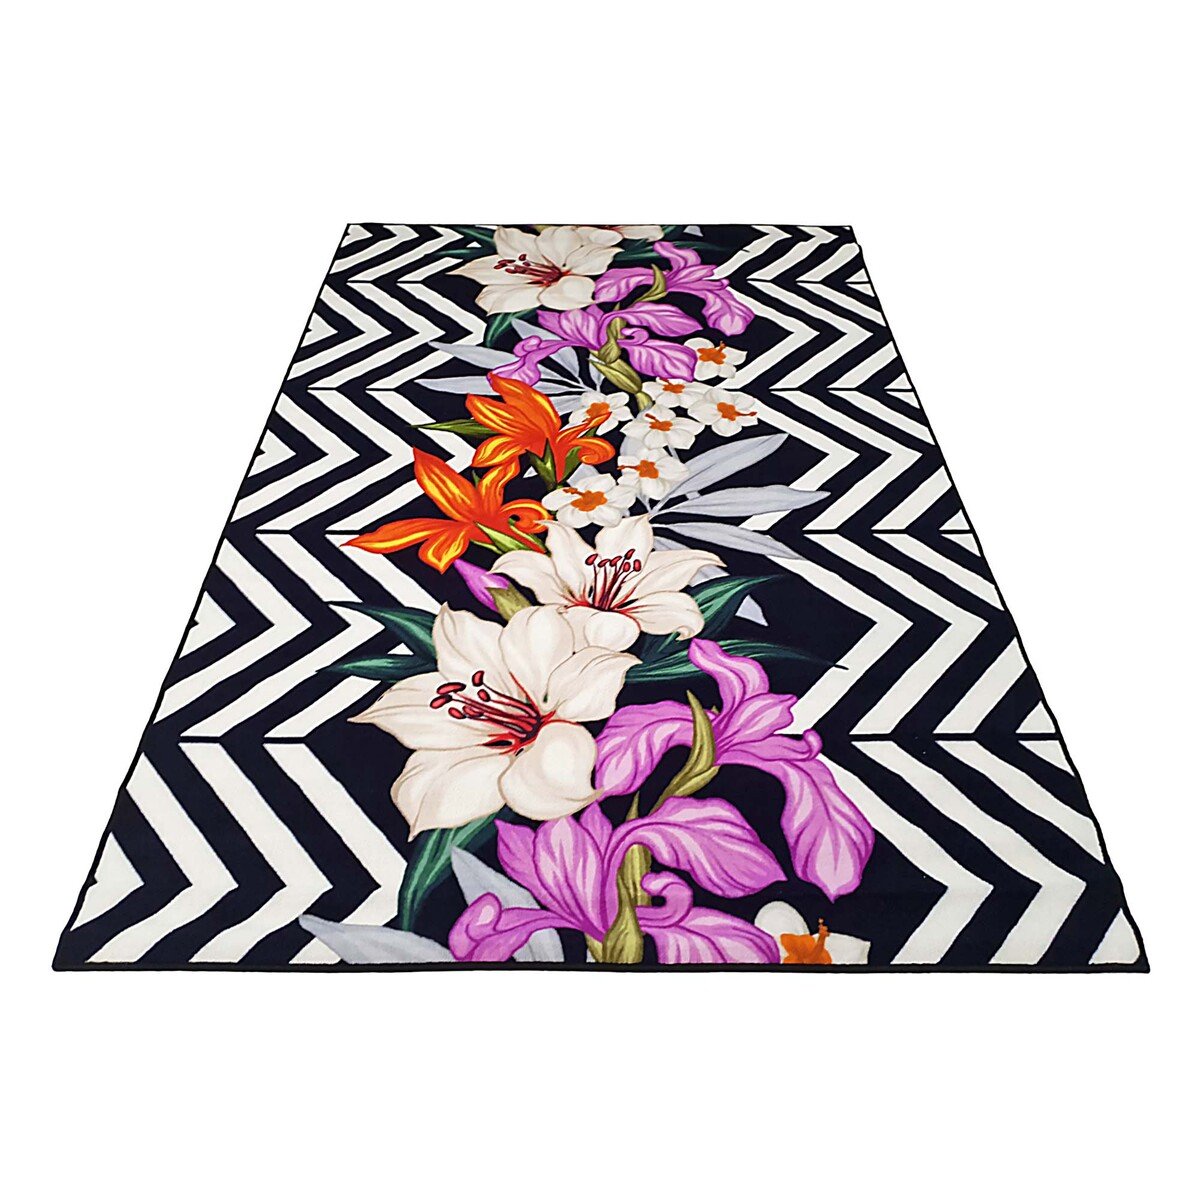 Sofia Carpet Anti Slip WH93Size: W150 x L 220cm